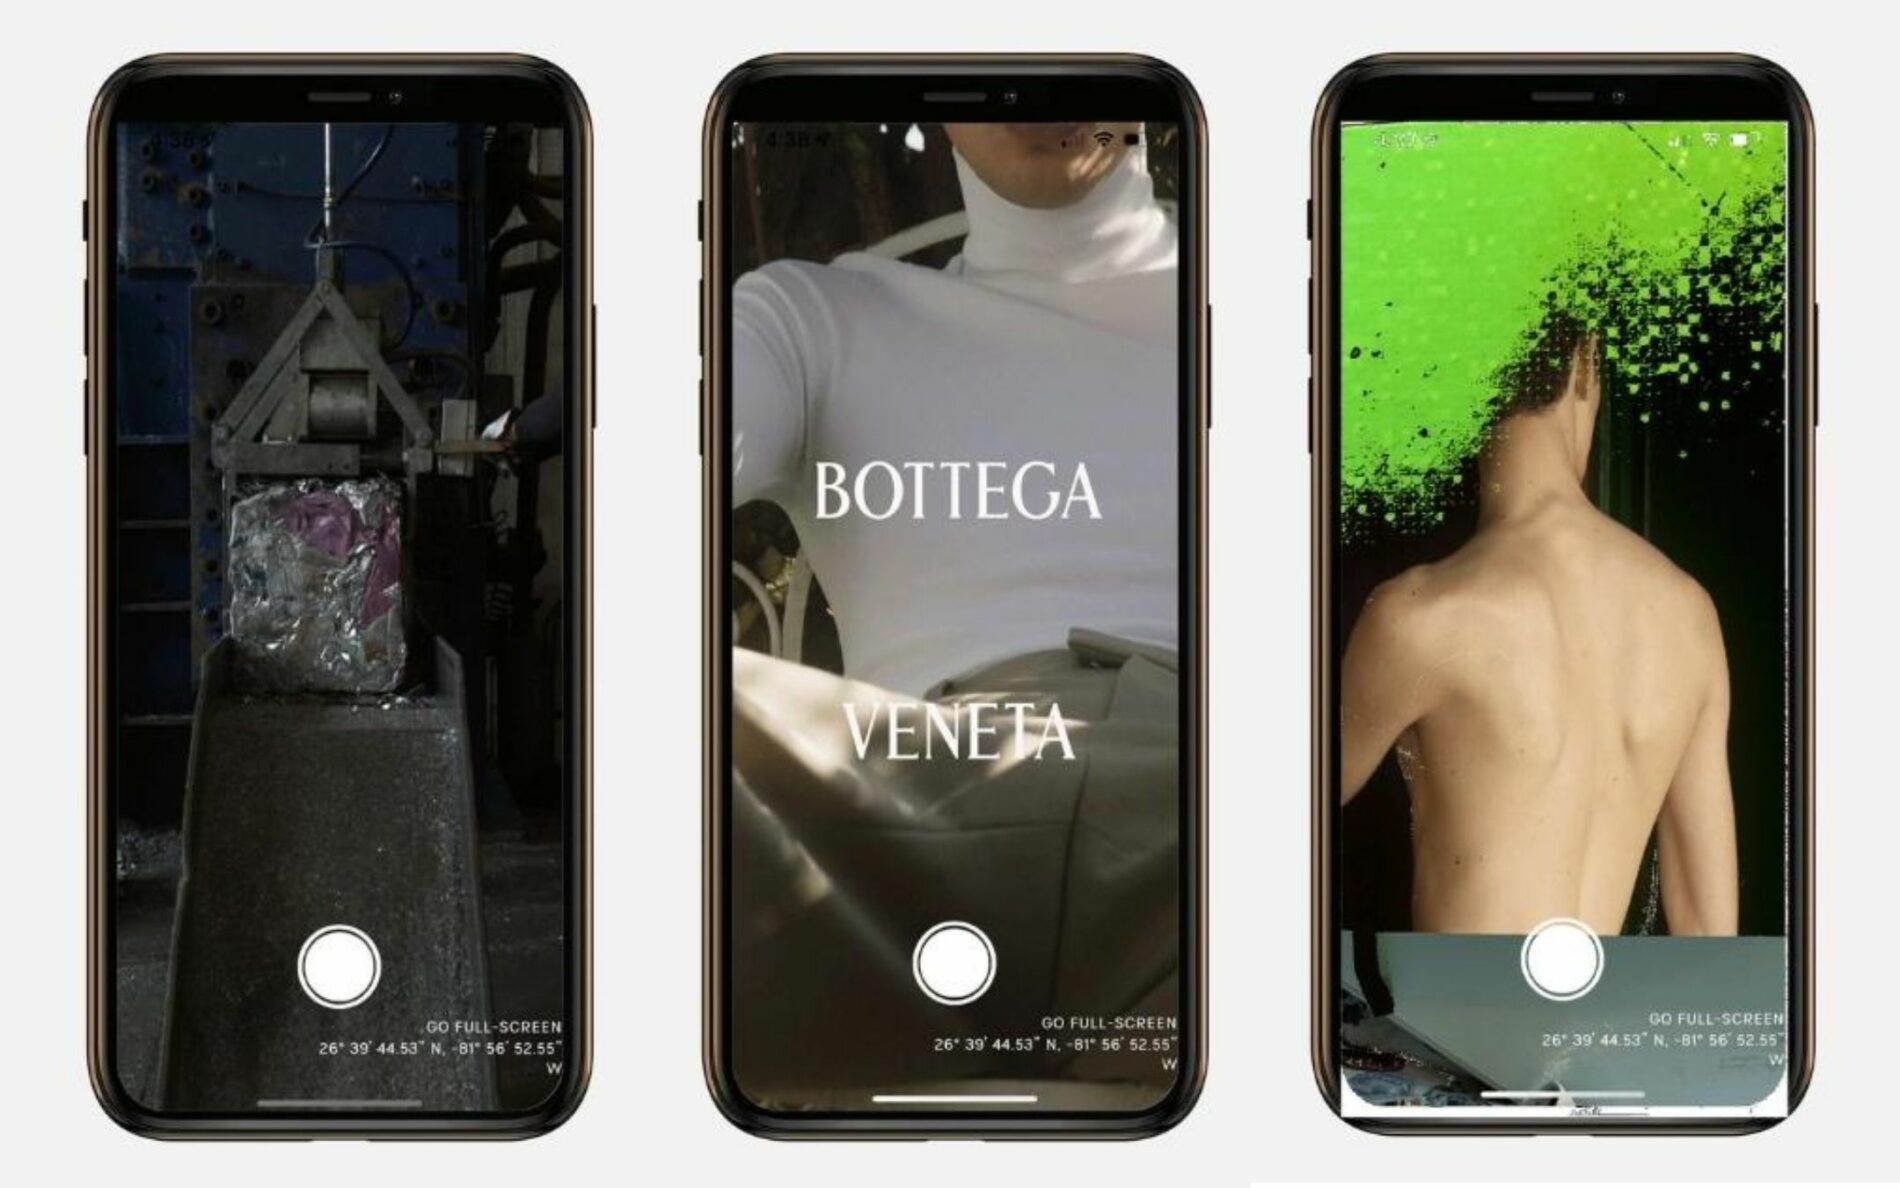 three images of a Bottega Veneta app on a smart phone